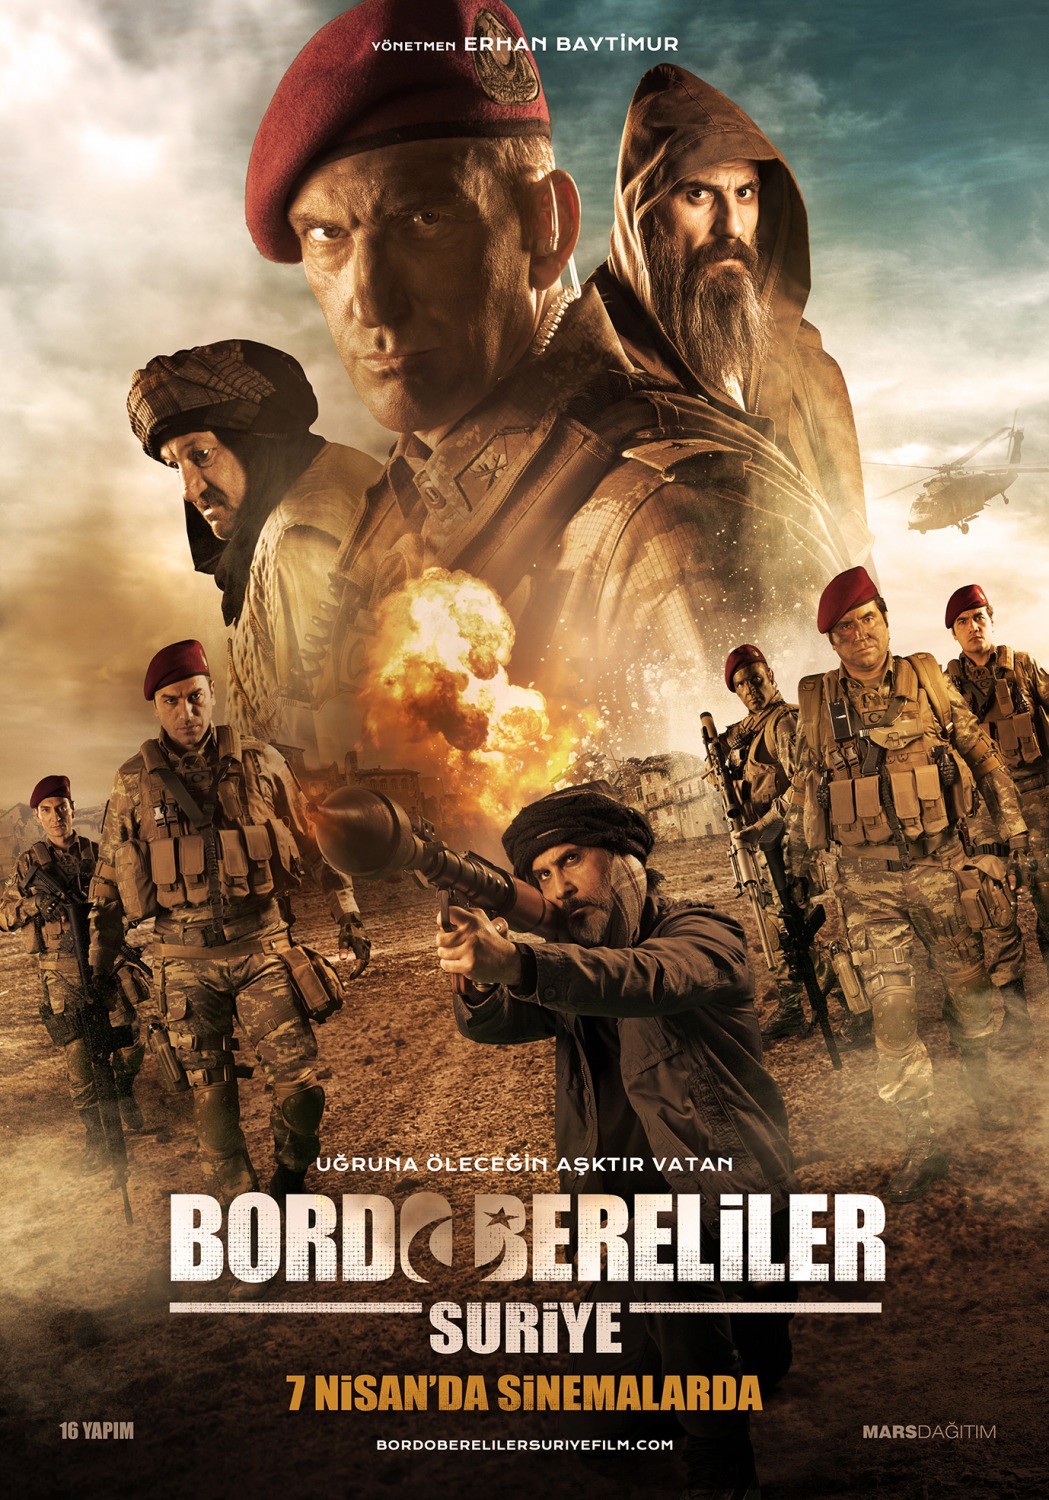 Extra Large Movie Poster Image for Bordo Bereliler Suriye (#1 of 10)